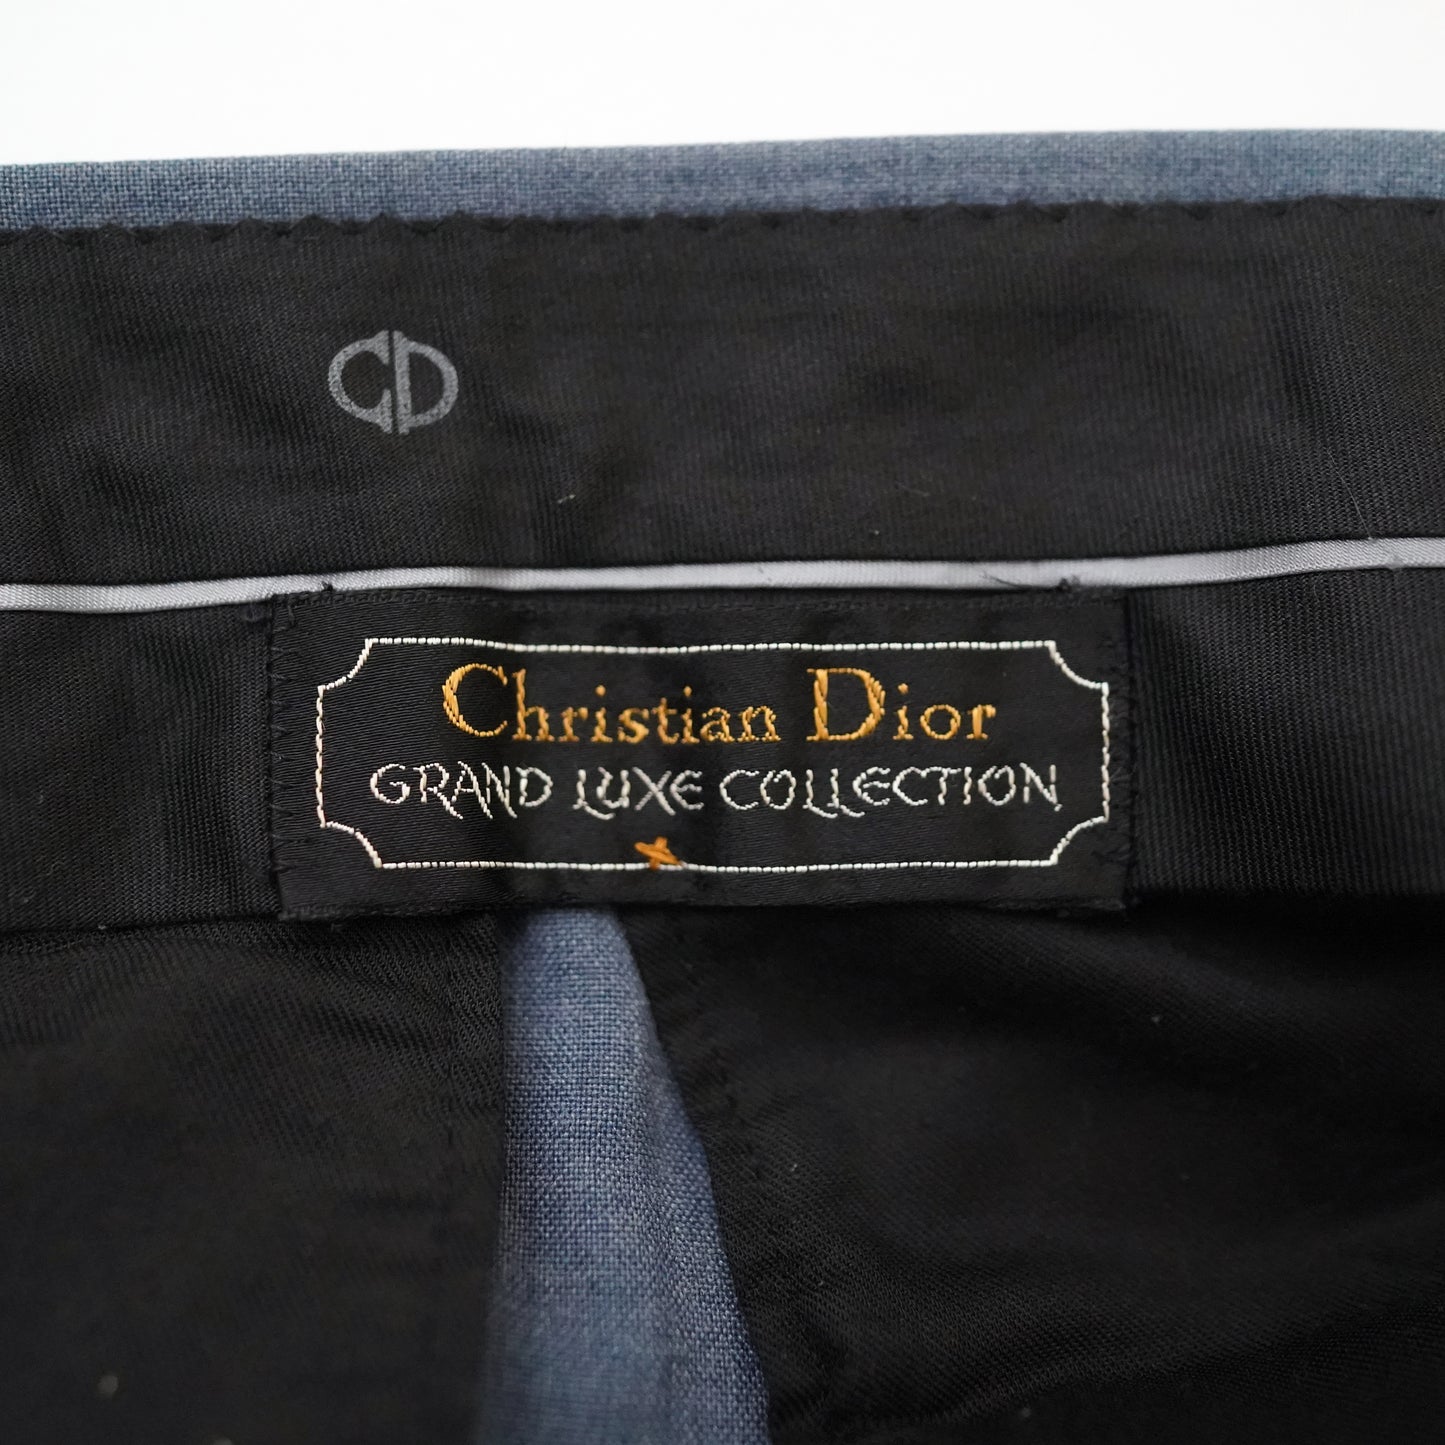 christian dior grand luxe collection slacks